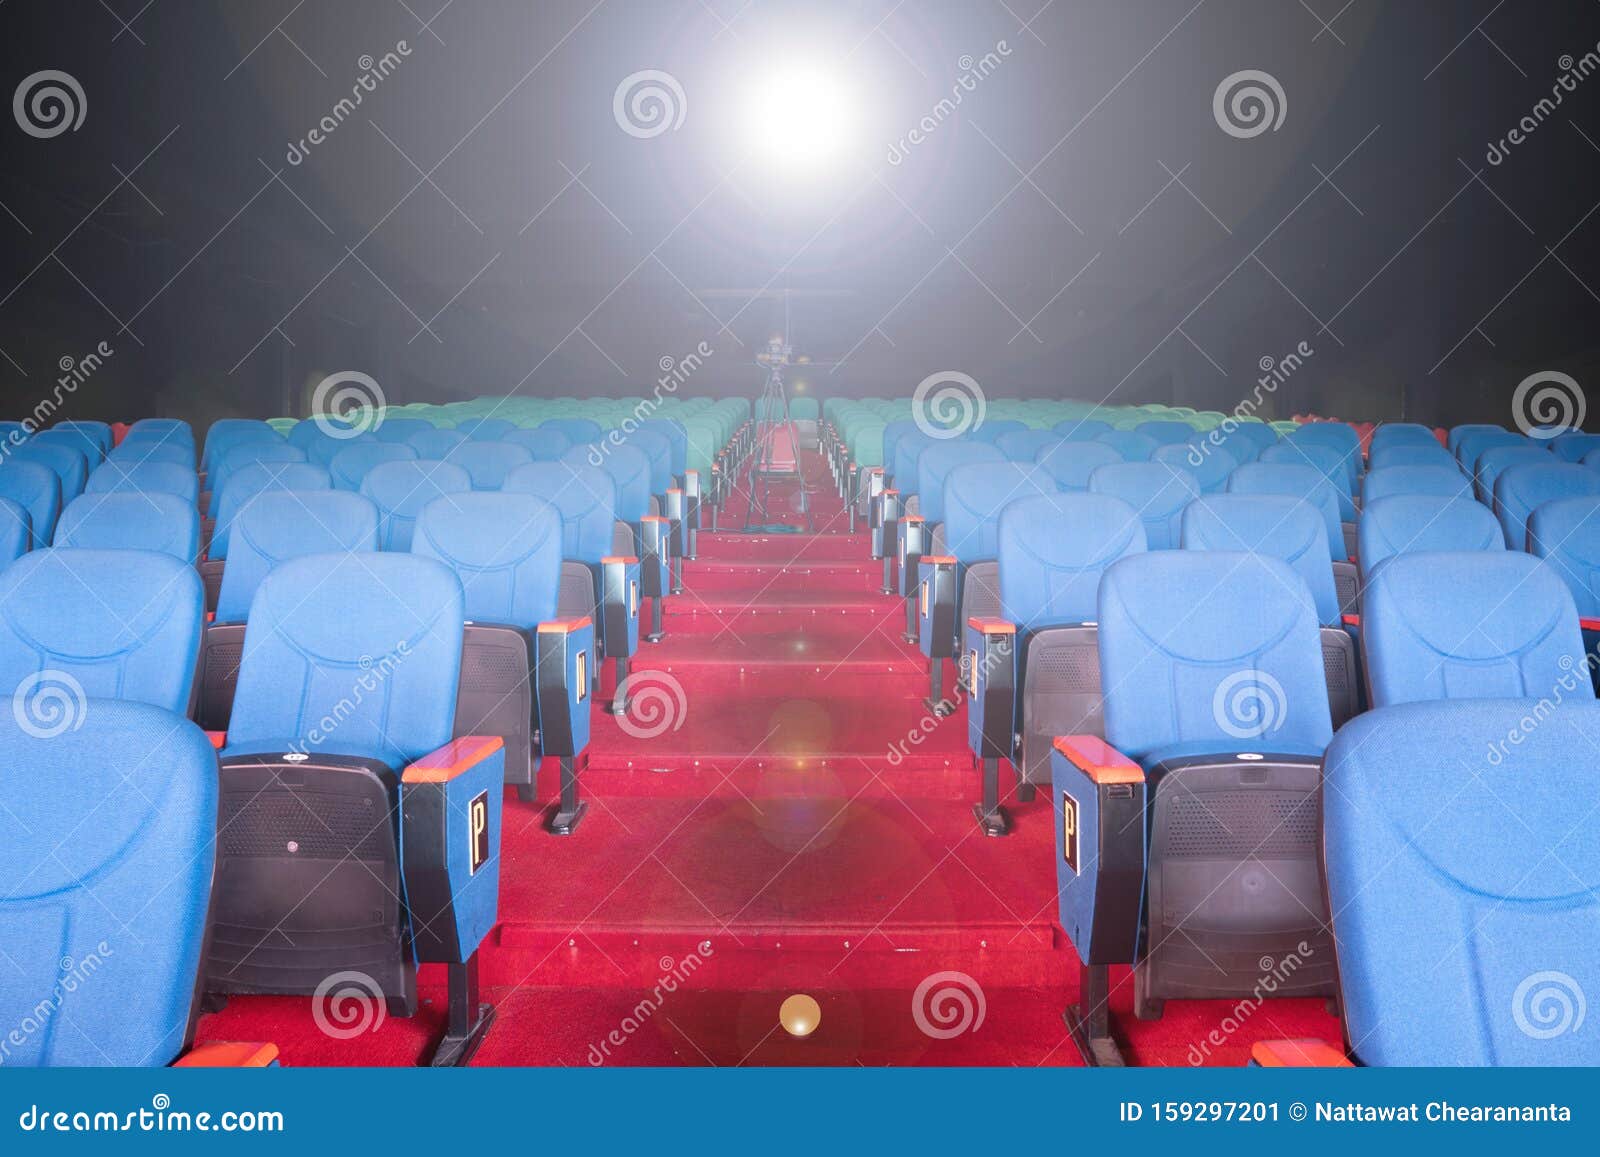 concert film seat premiere